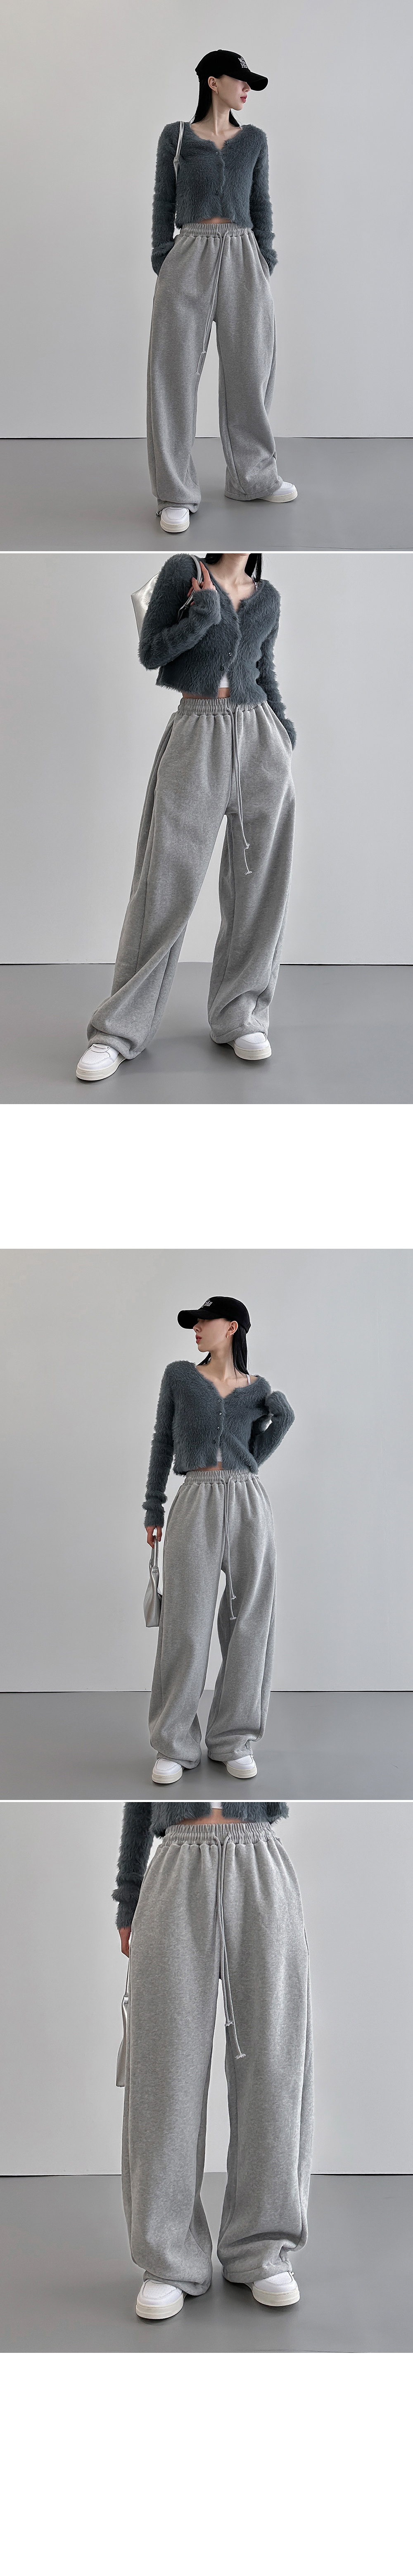 dress grey color image-S1L6